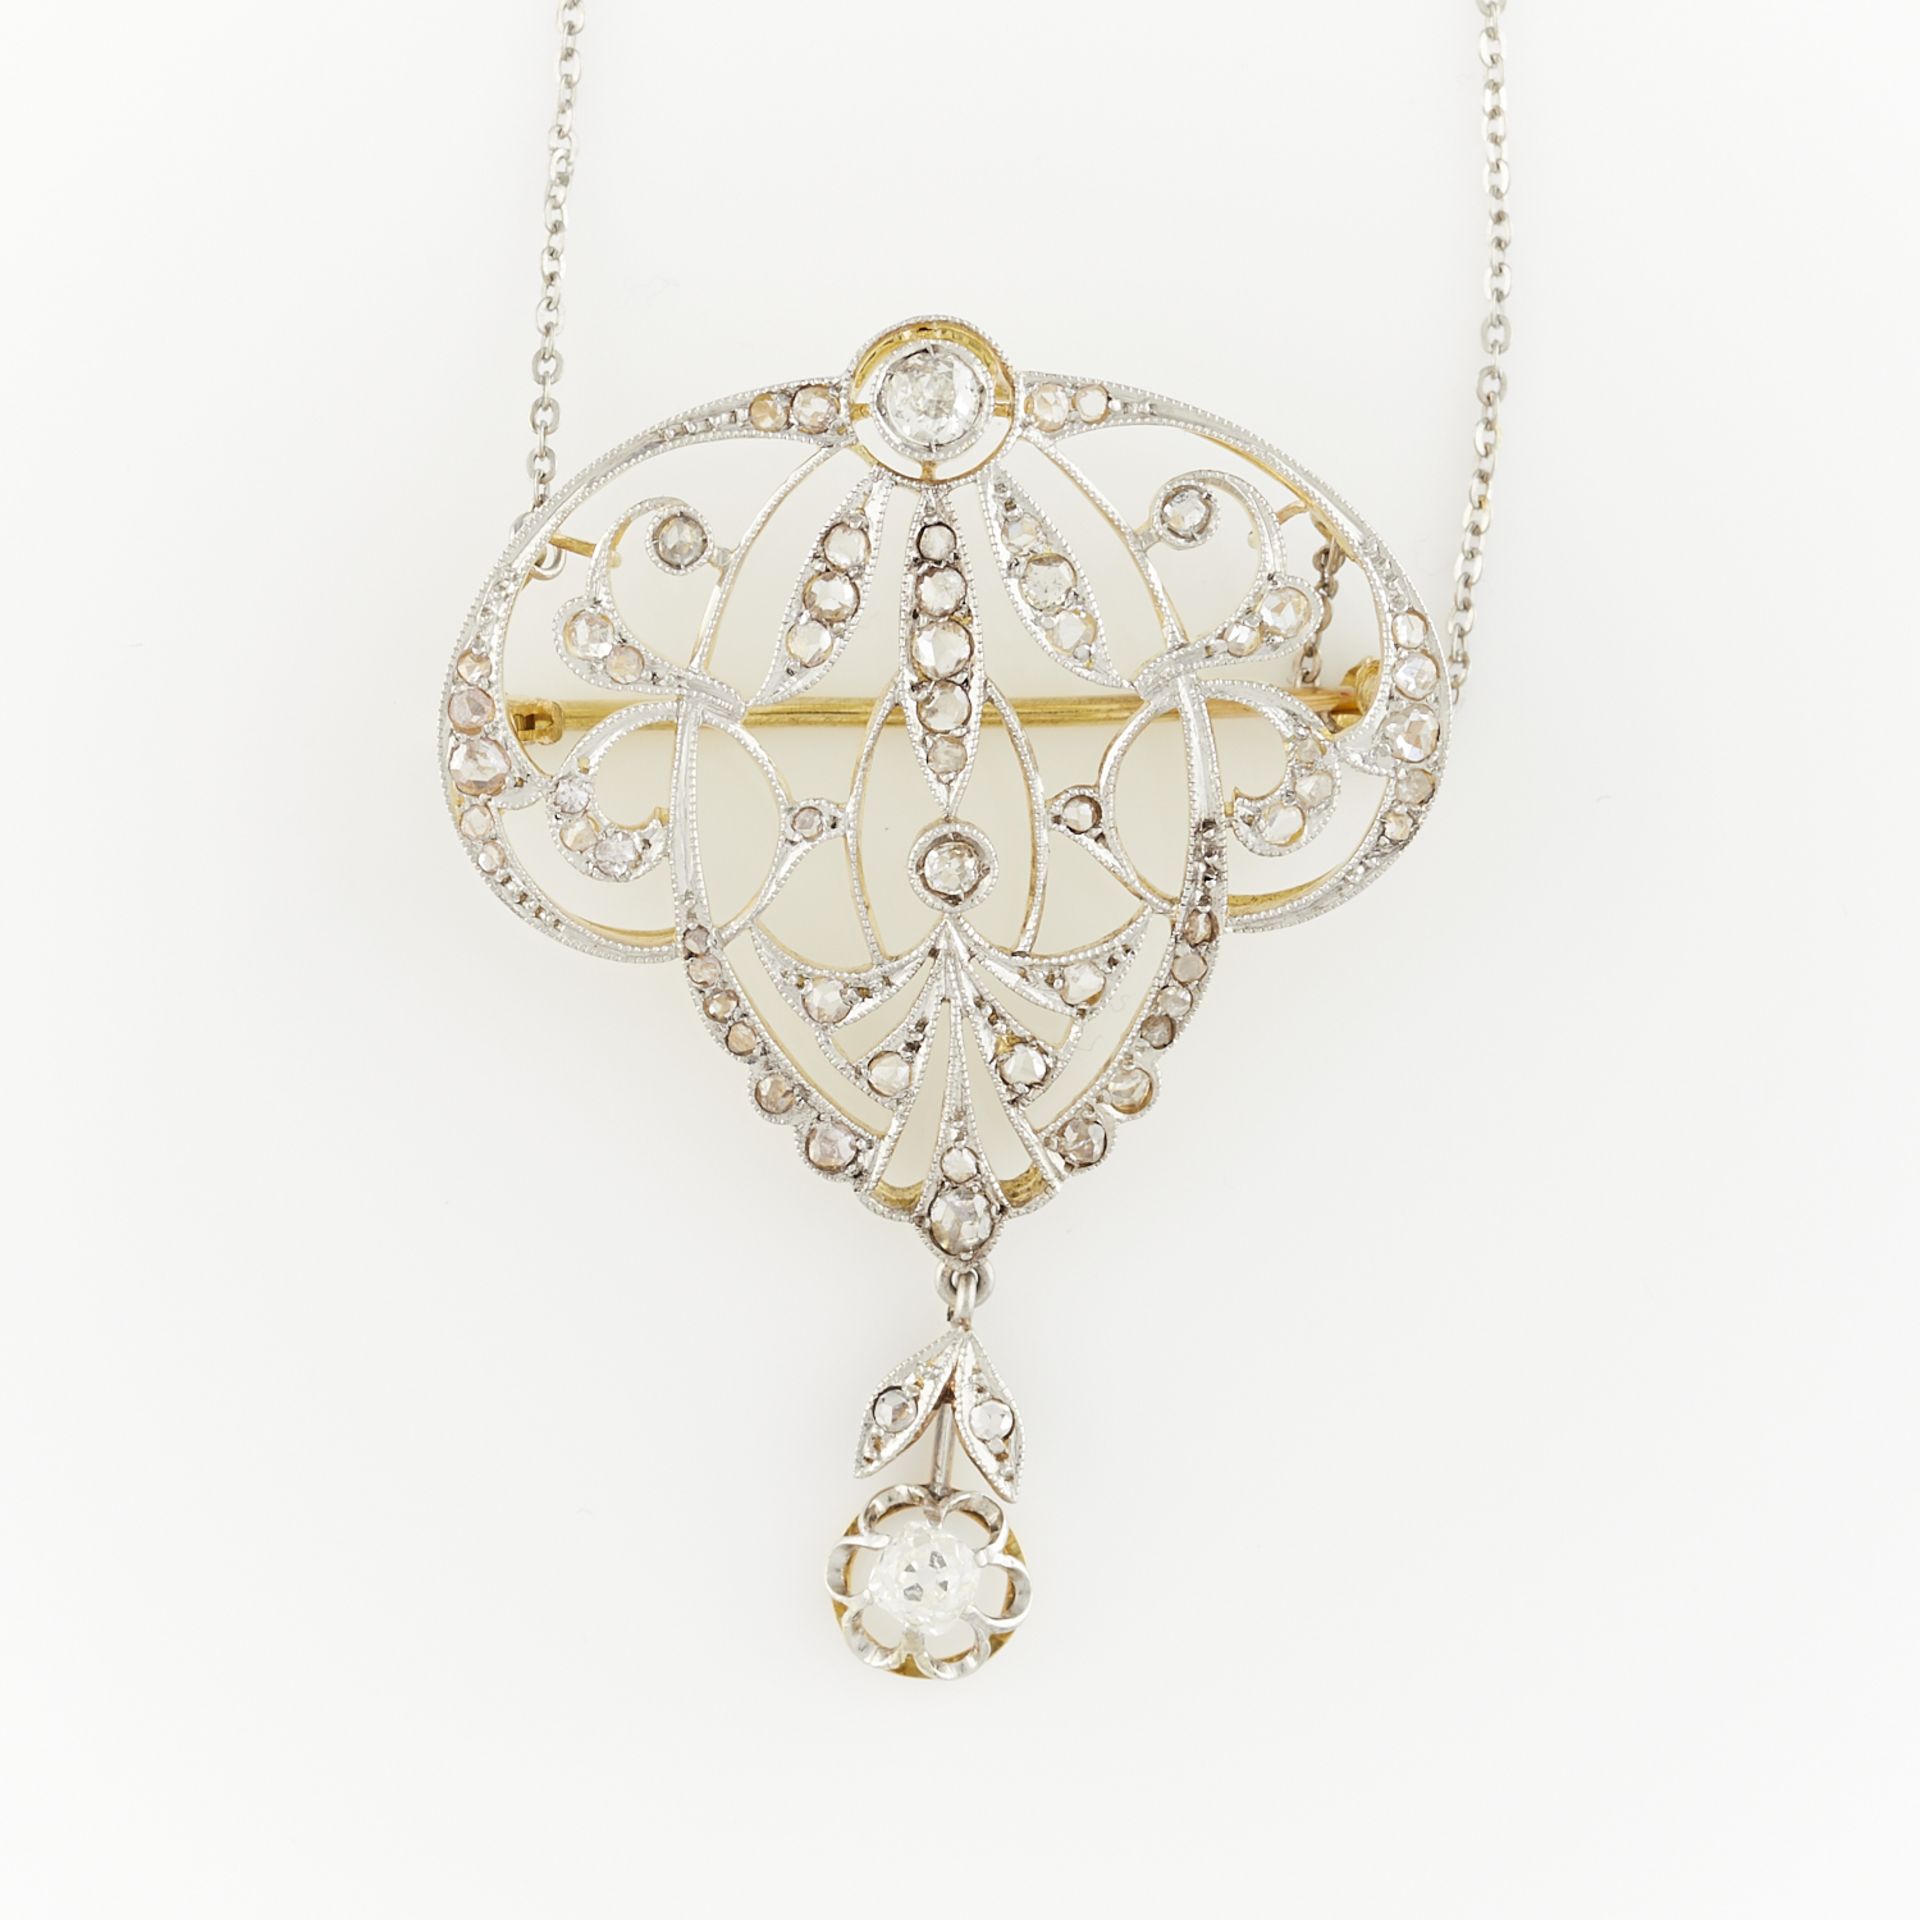 Edwardian Pendant Brooch with Diamonds